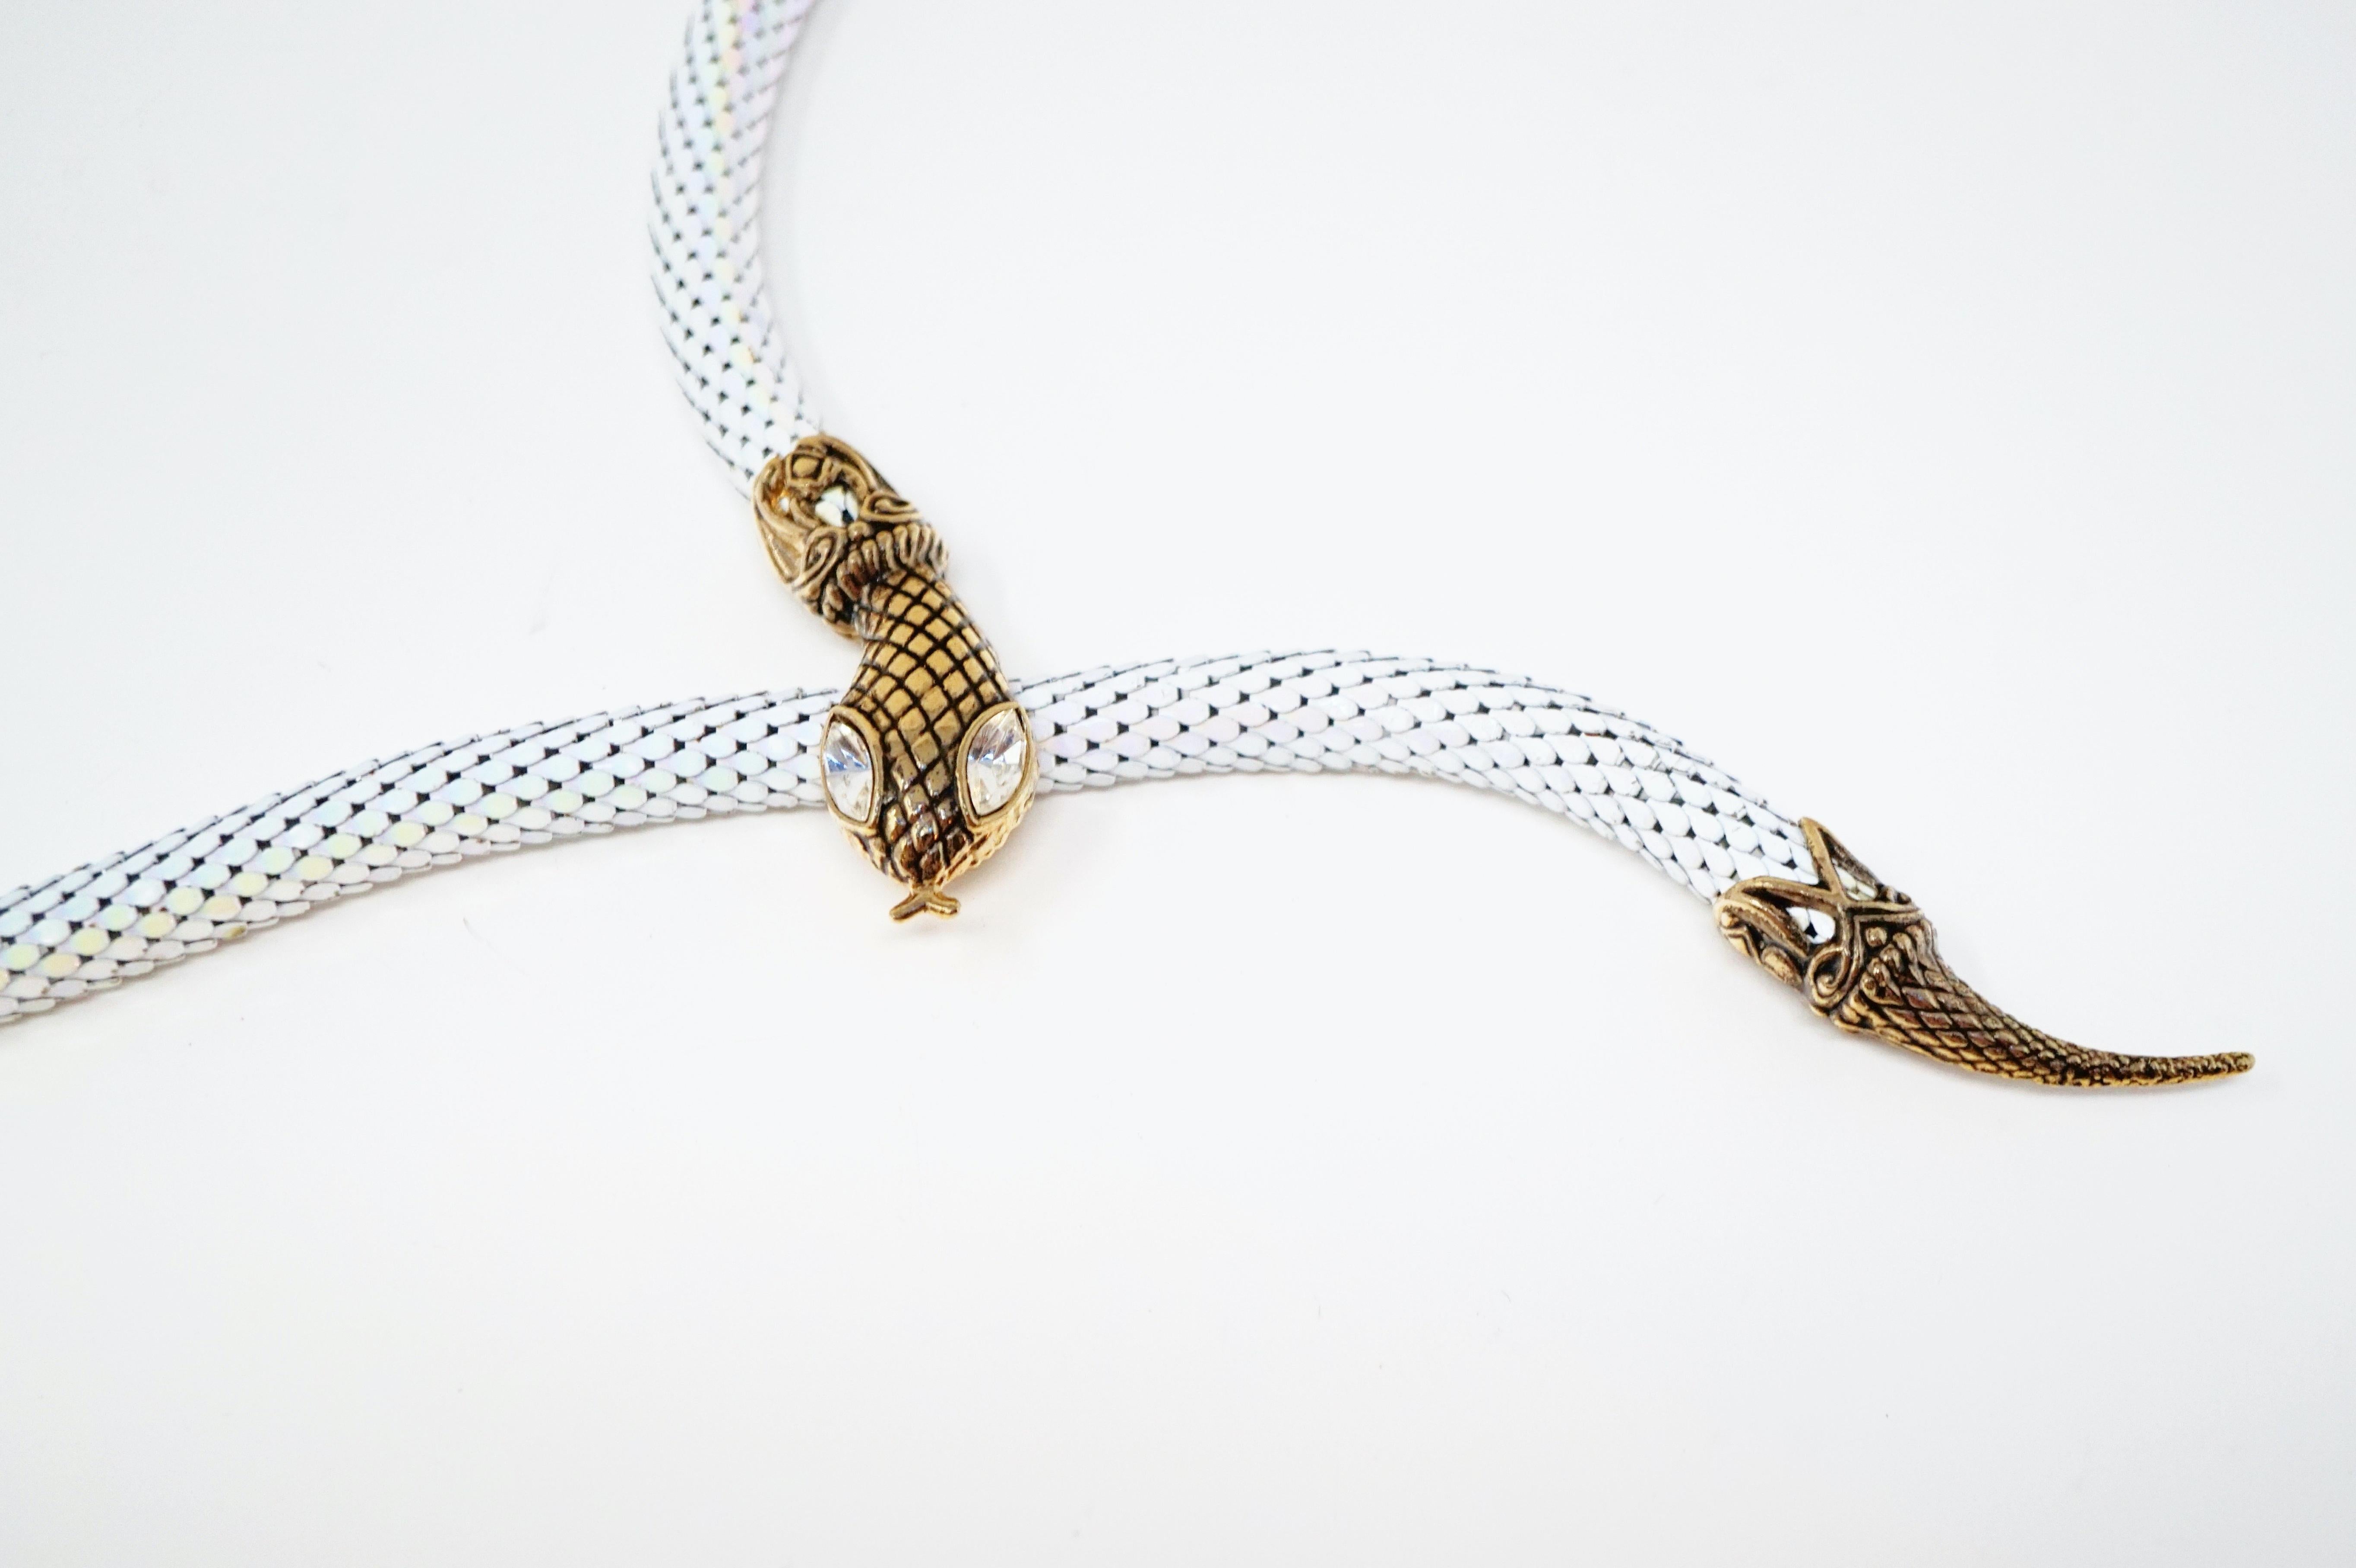 1980s Iridescent Mesh Snake Belt or Necklace by DL Auld Co, Signed 1